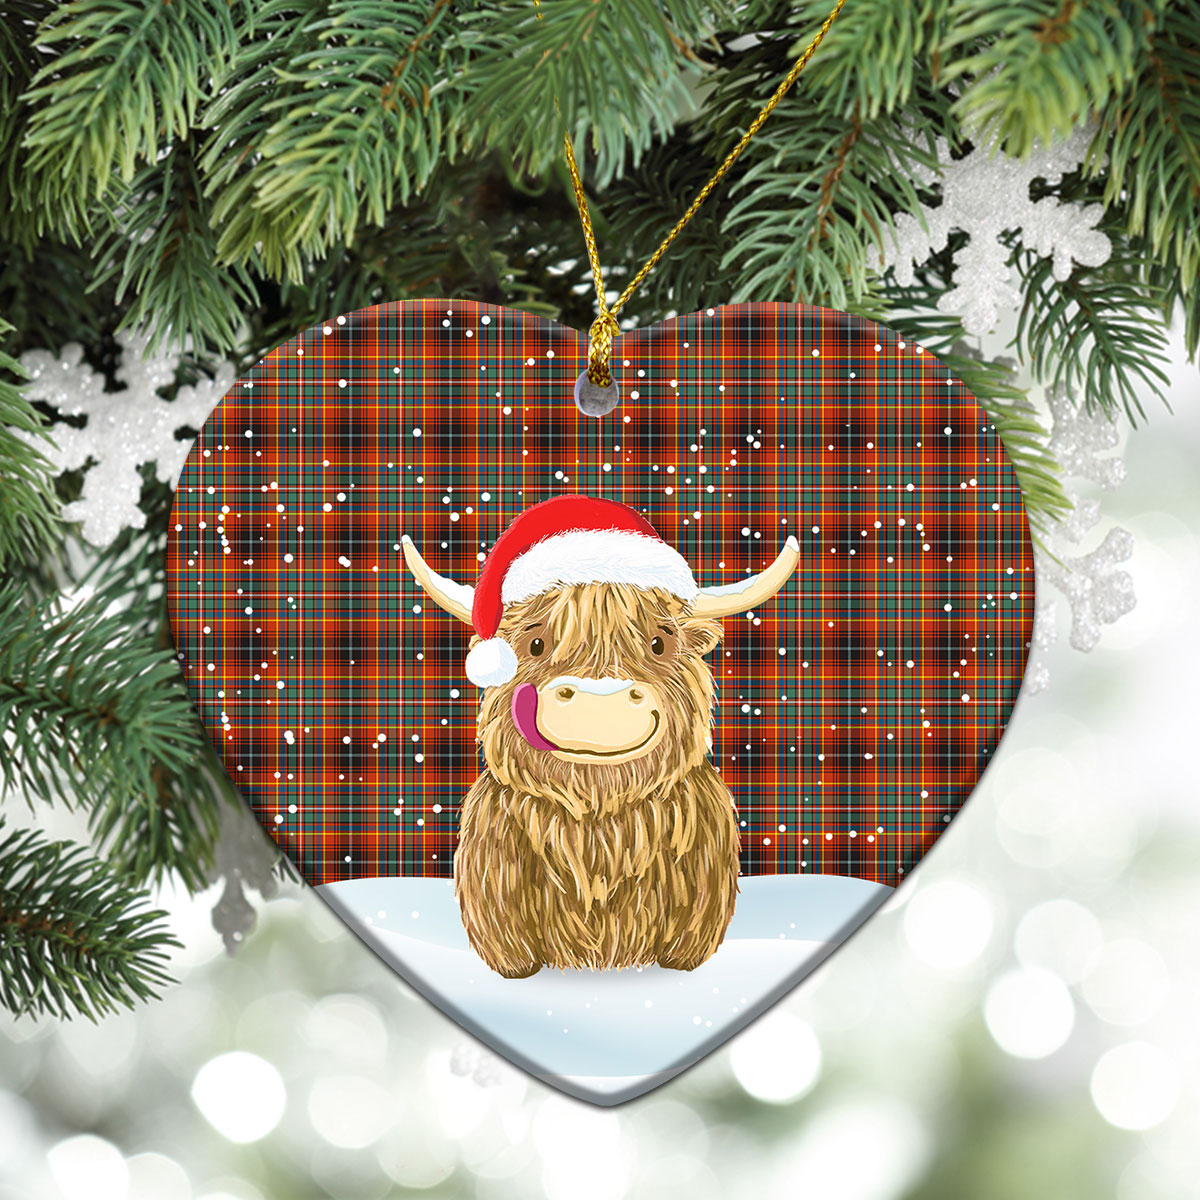 Innes Ancient Tartan Christmas Ceramic Ornament - Highland Cows Style